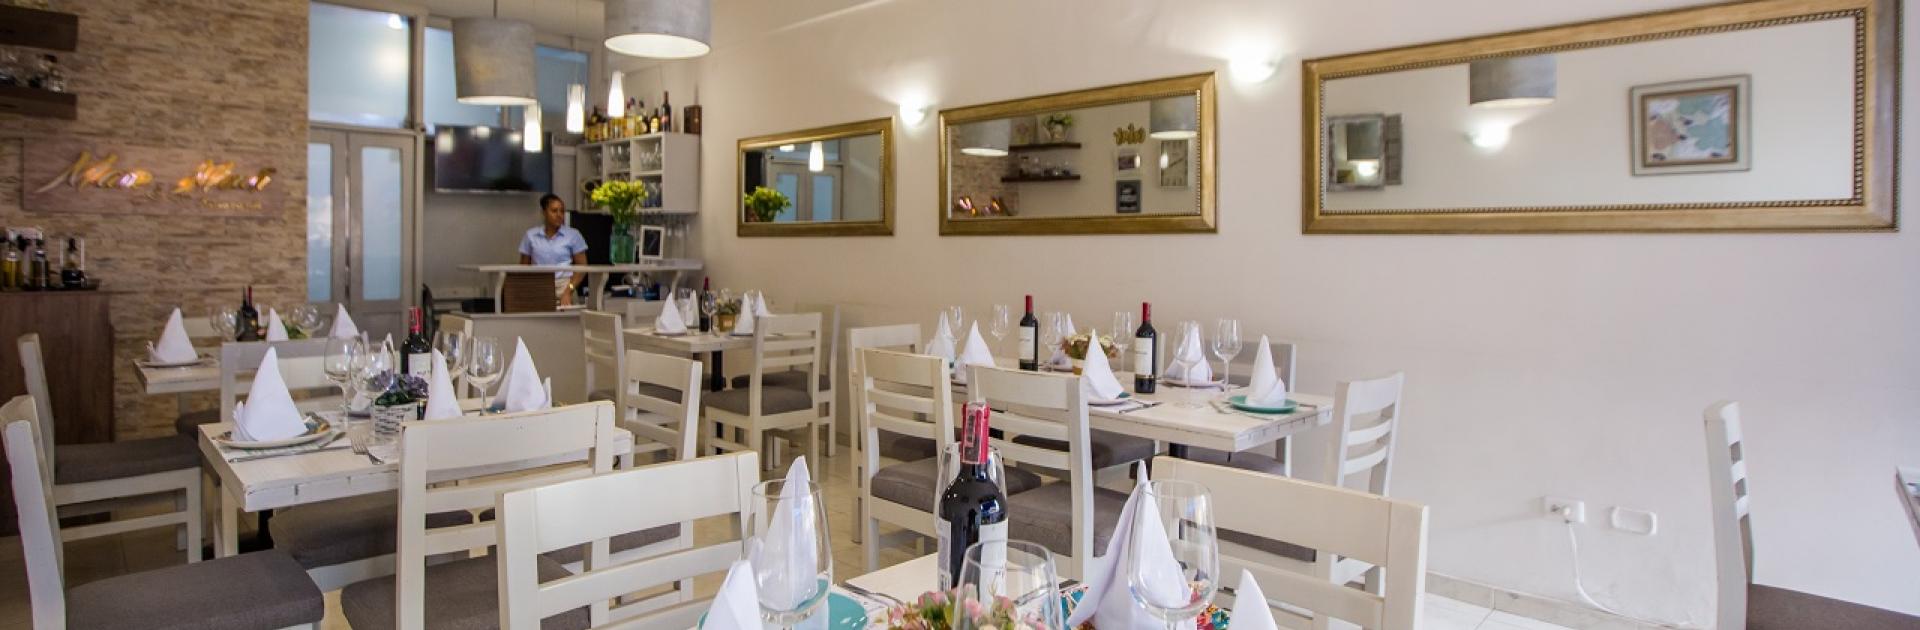 Restaurante Mare e Monti, participante de Dónde Restaurant Week 2019 en Cartagena de Indias